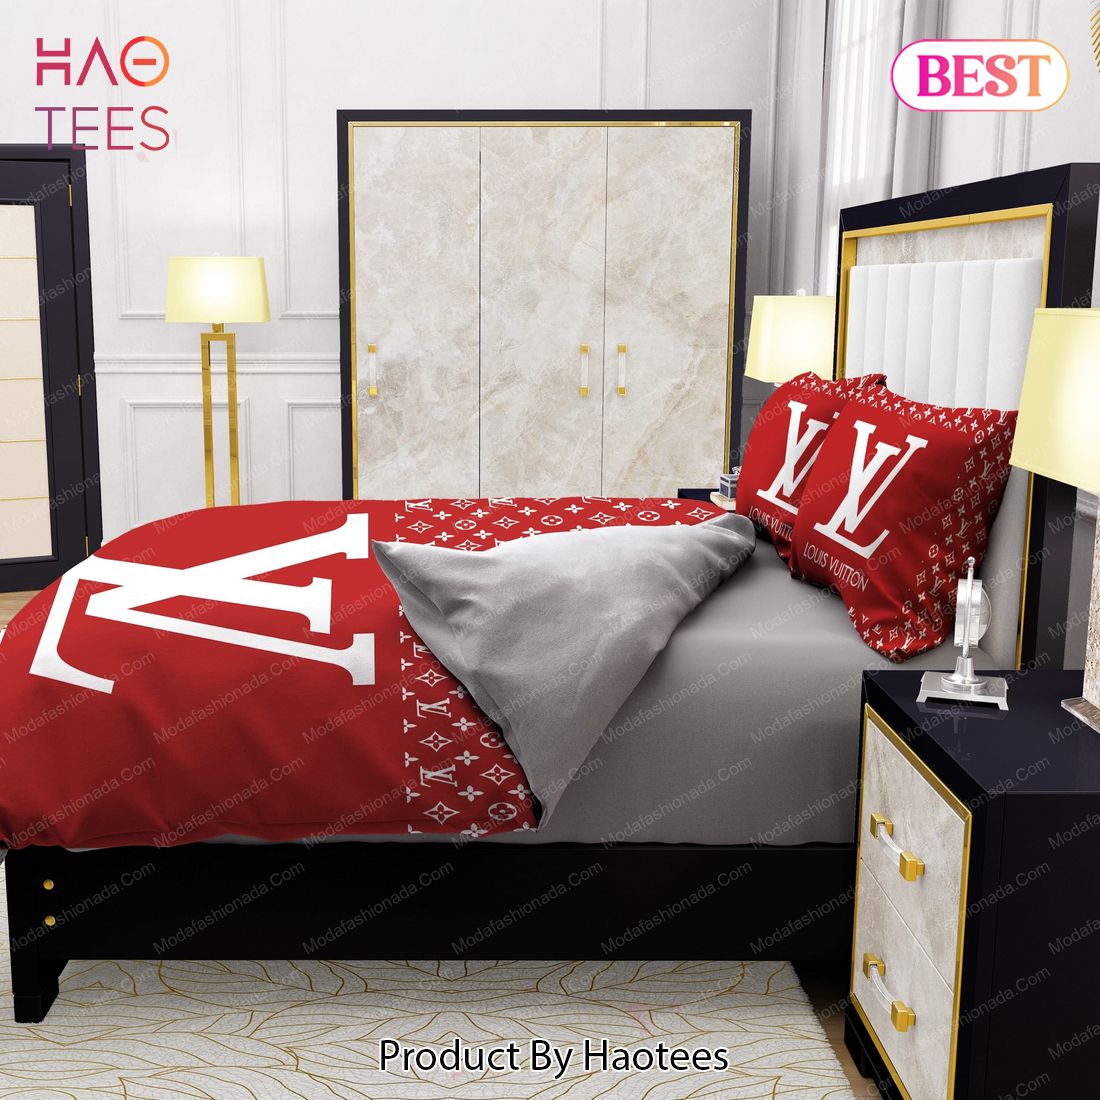 Louis Vuitton Basic Logo In Red Background Bedding Set Queen